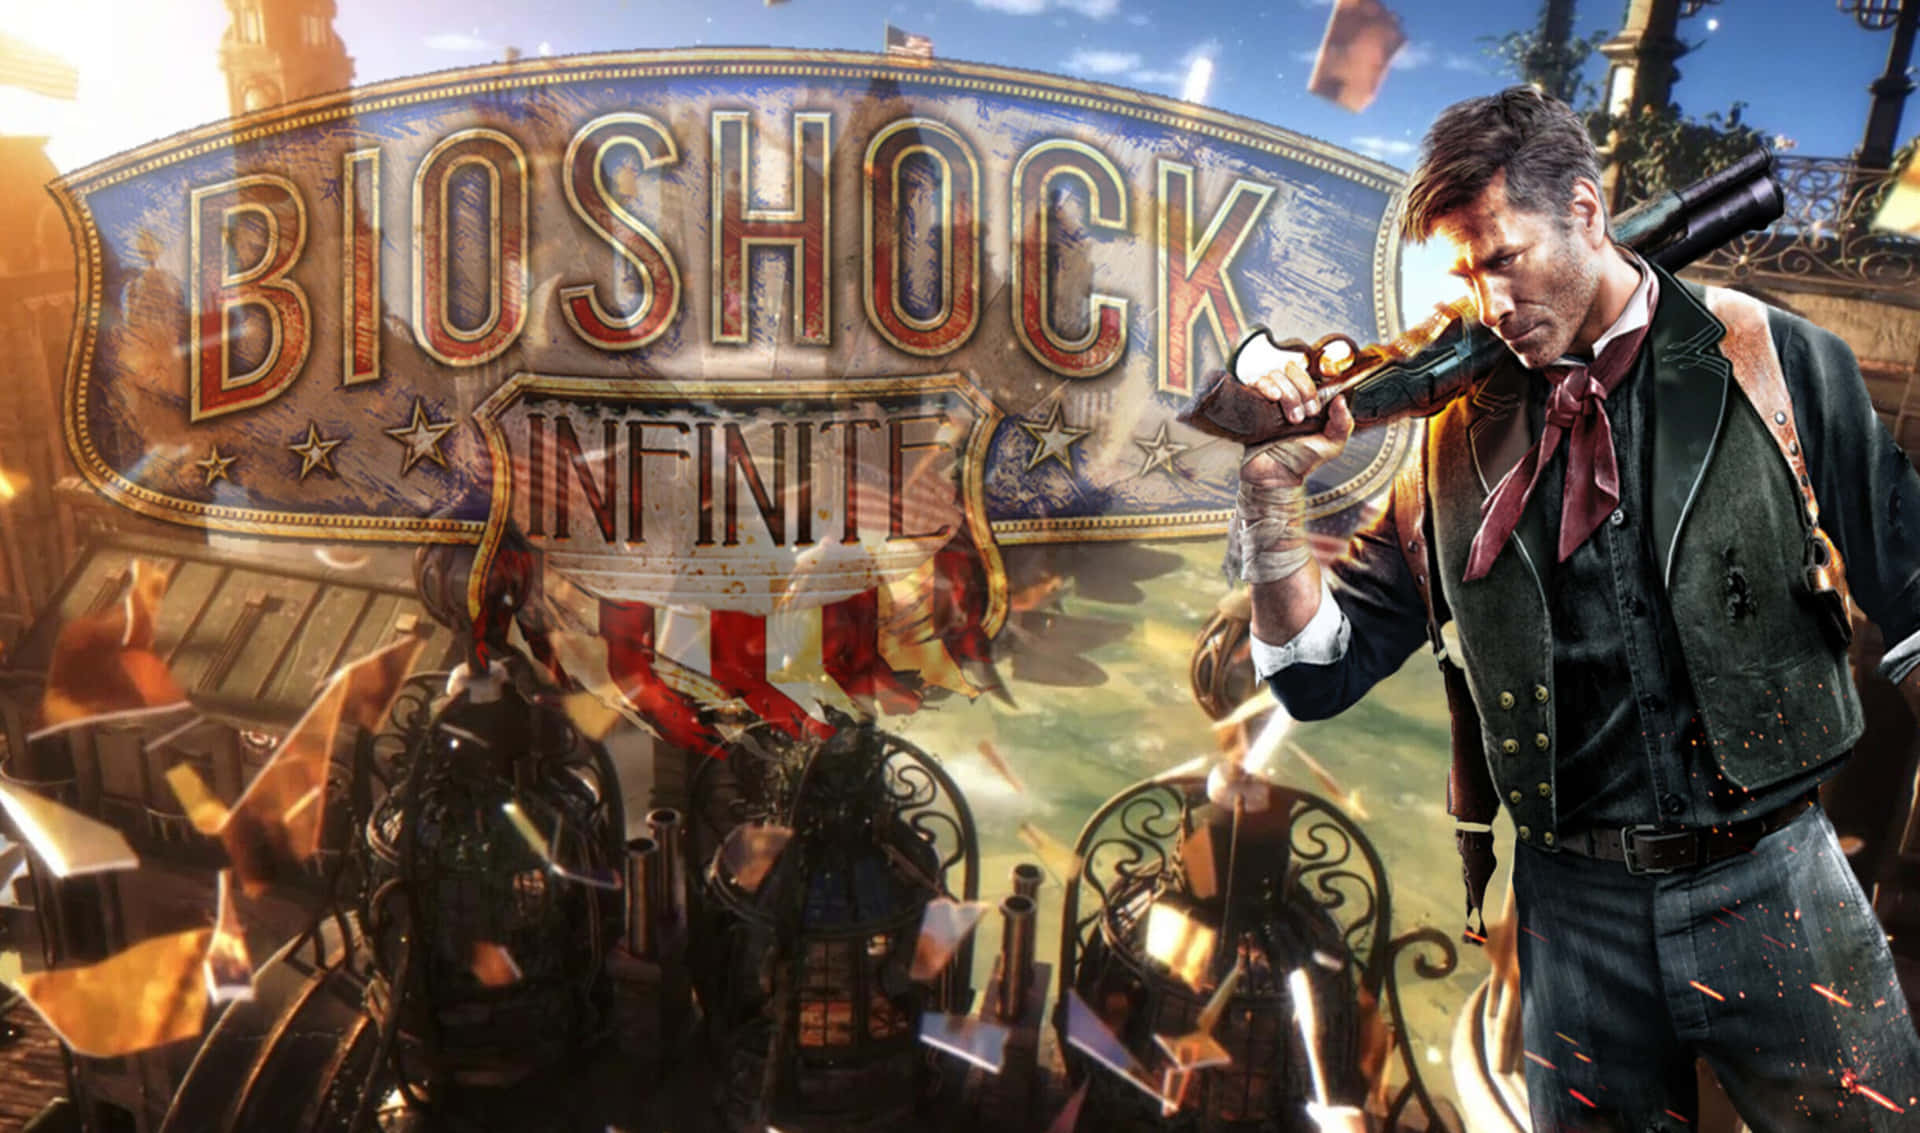 2440x1440 Booker Dewitt Bioshock Infinite Background Poster Wallpaper